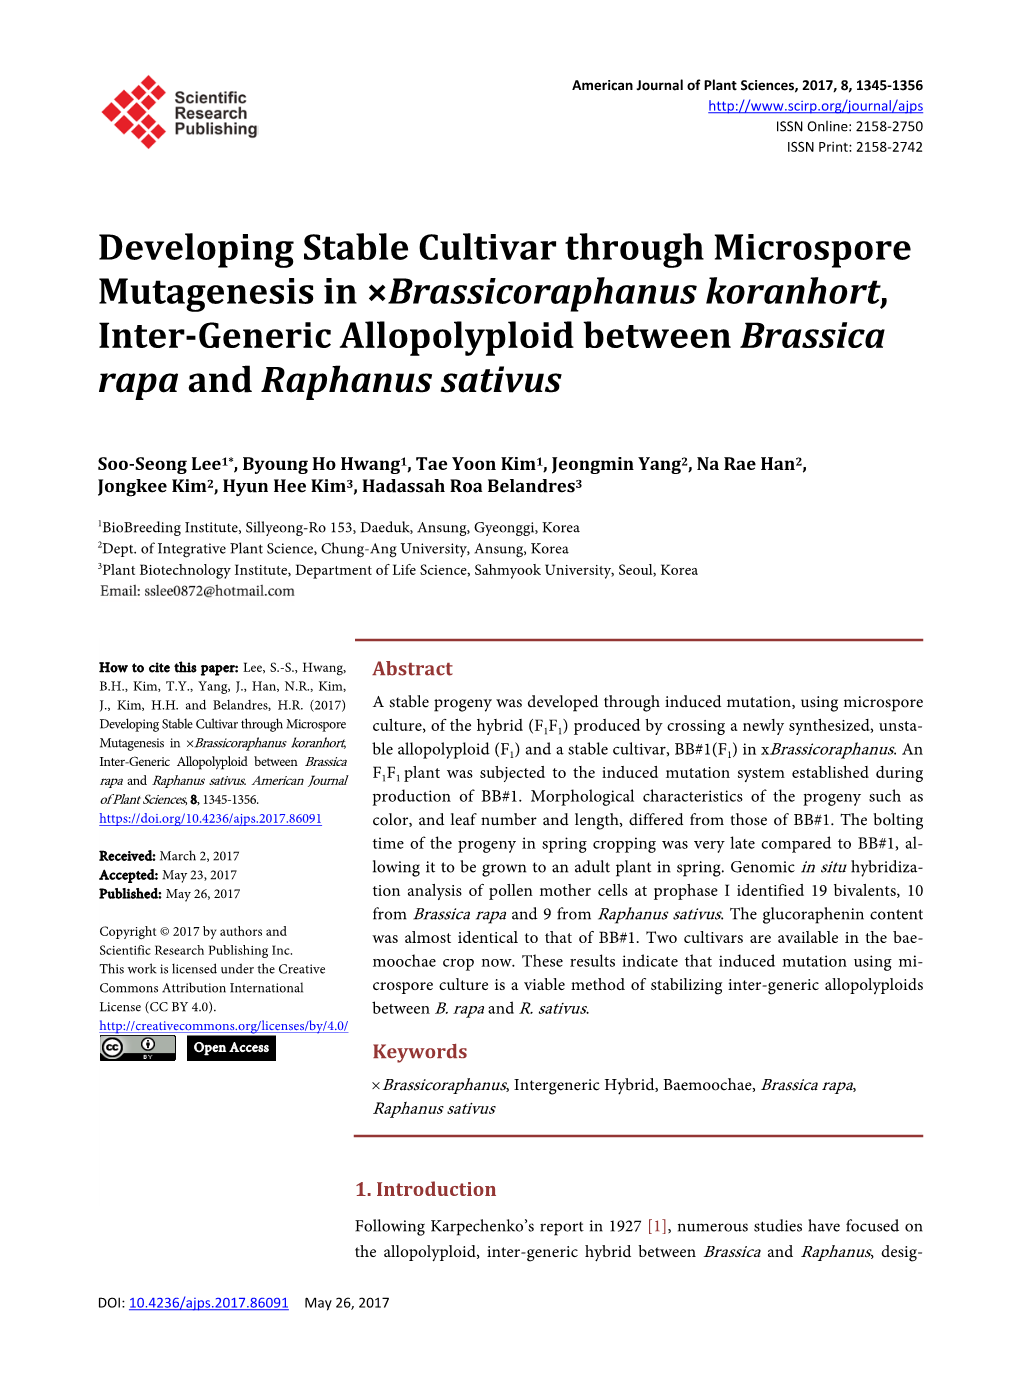 Developing Stable Cultivar Through Microspore Mutagenesis in ×Brassicoraphanus Koranhort, Inter-Generic Allopolyploid Between Brassica Rapa and Raphanus Sativus